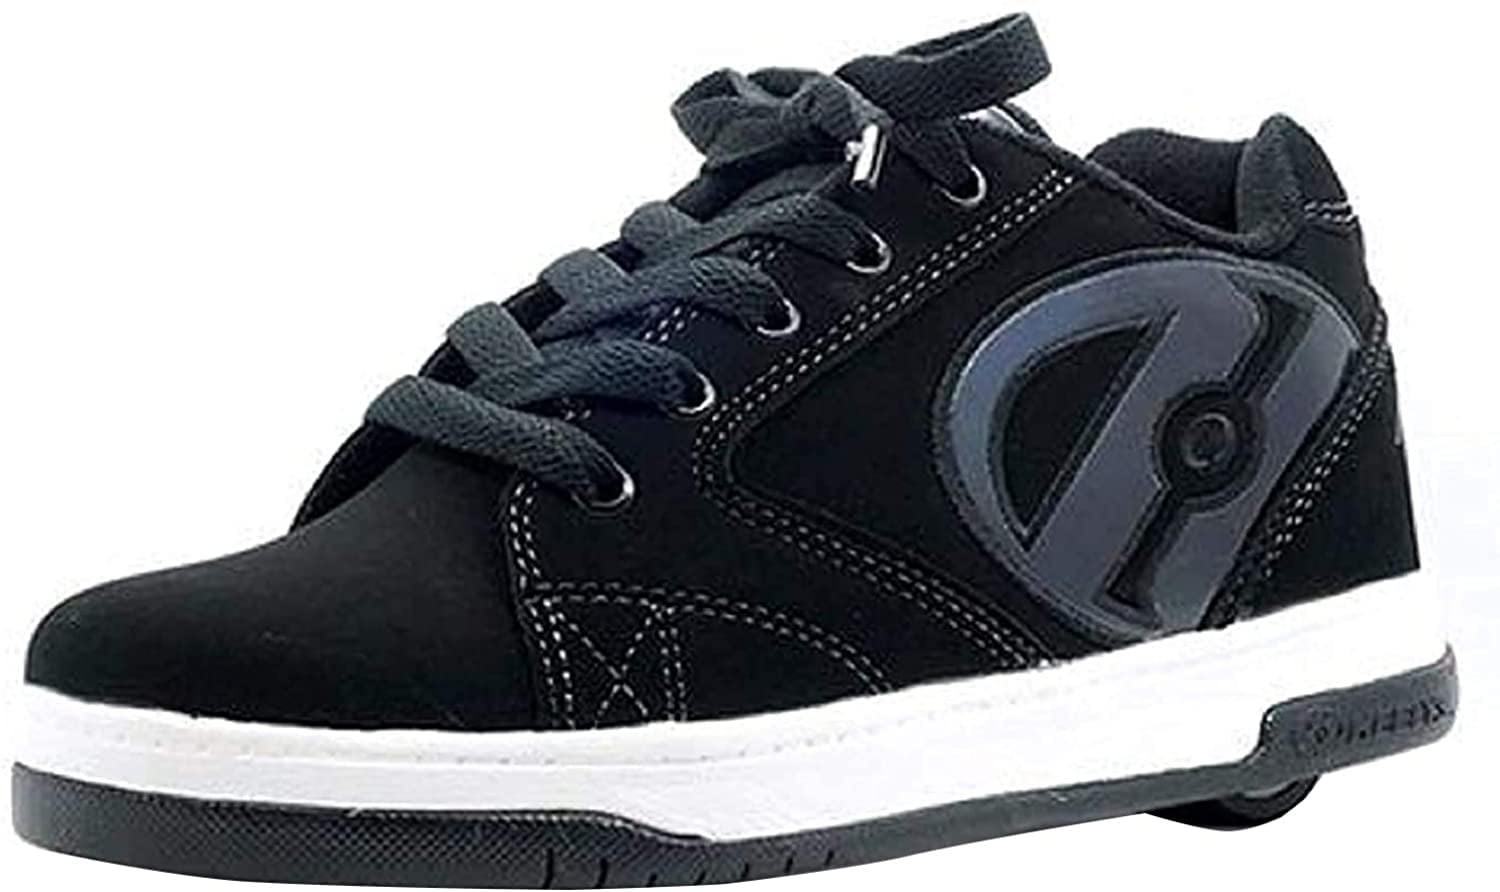 Heelys Propel 2.0 Black Trainers Shoes (6 US Big Kid, Black) | Walmart ...